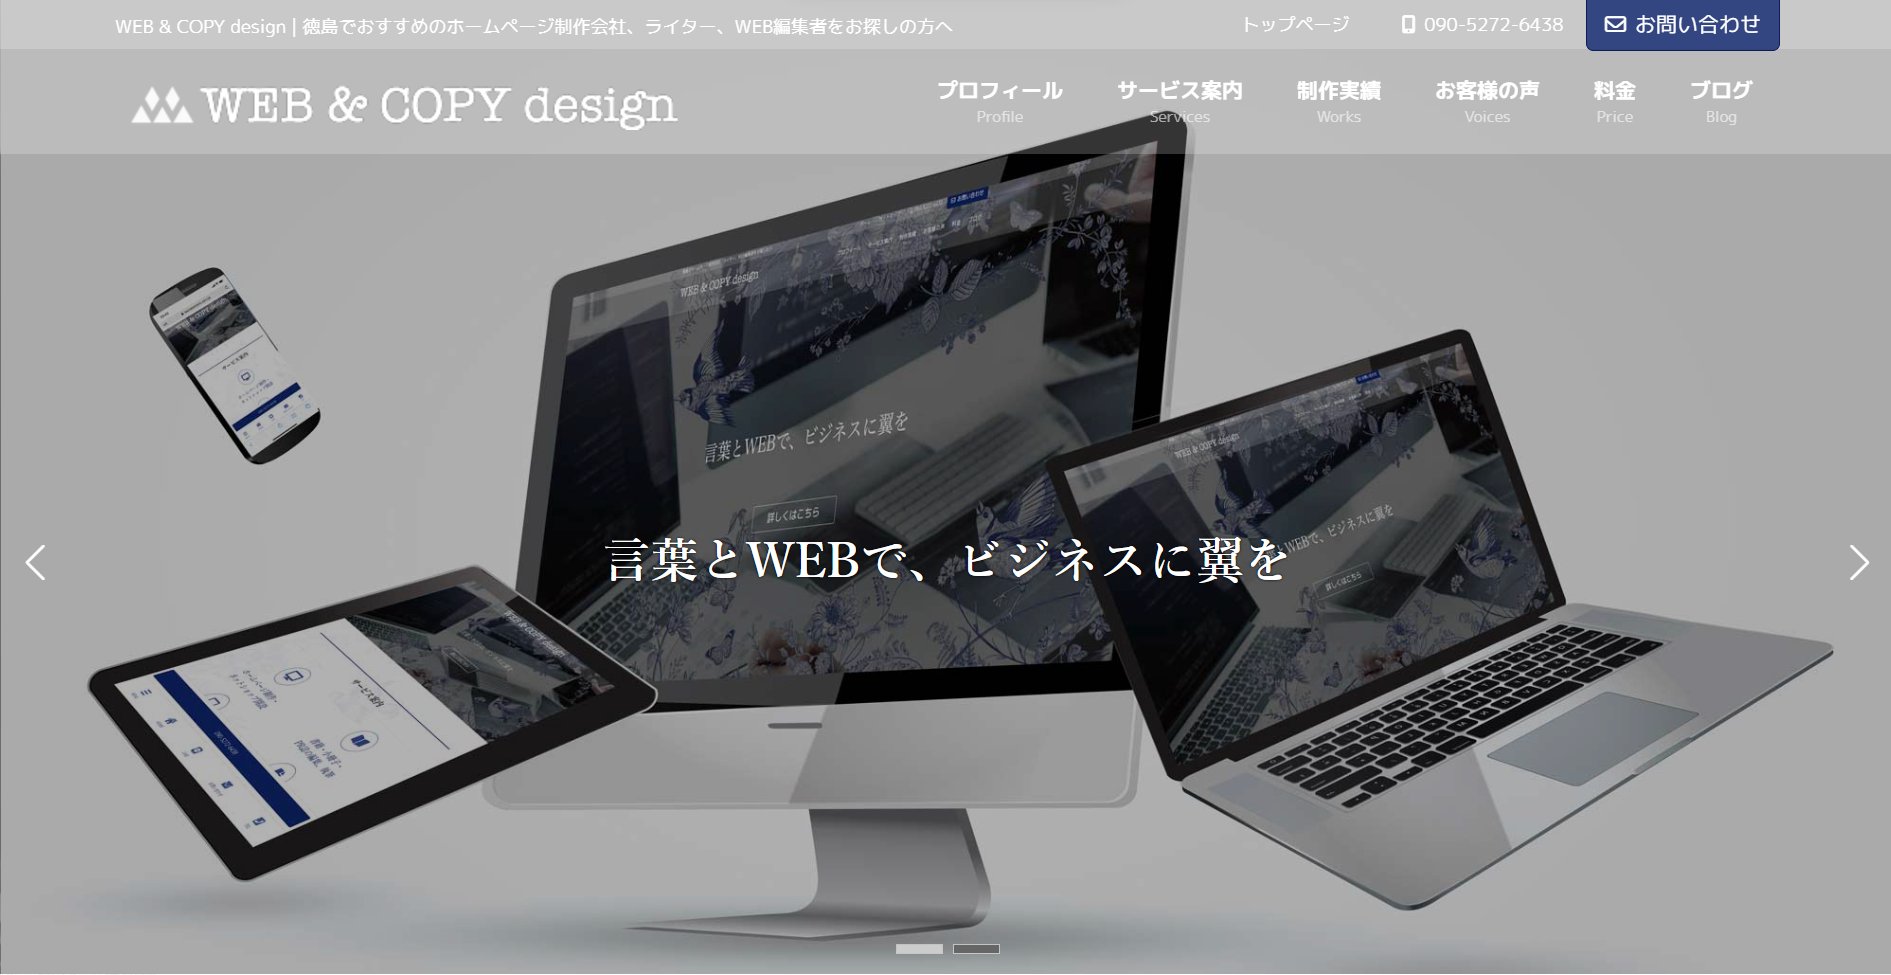 WEB & COPY designのWEB & COPY designサービス